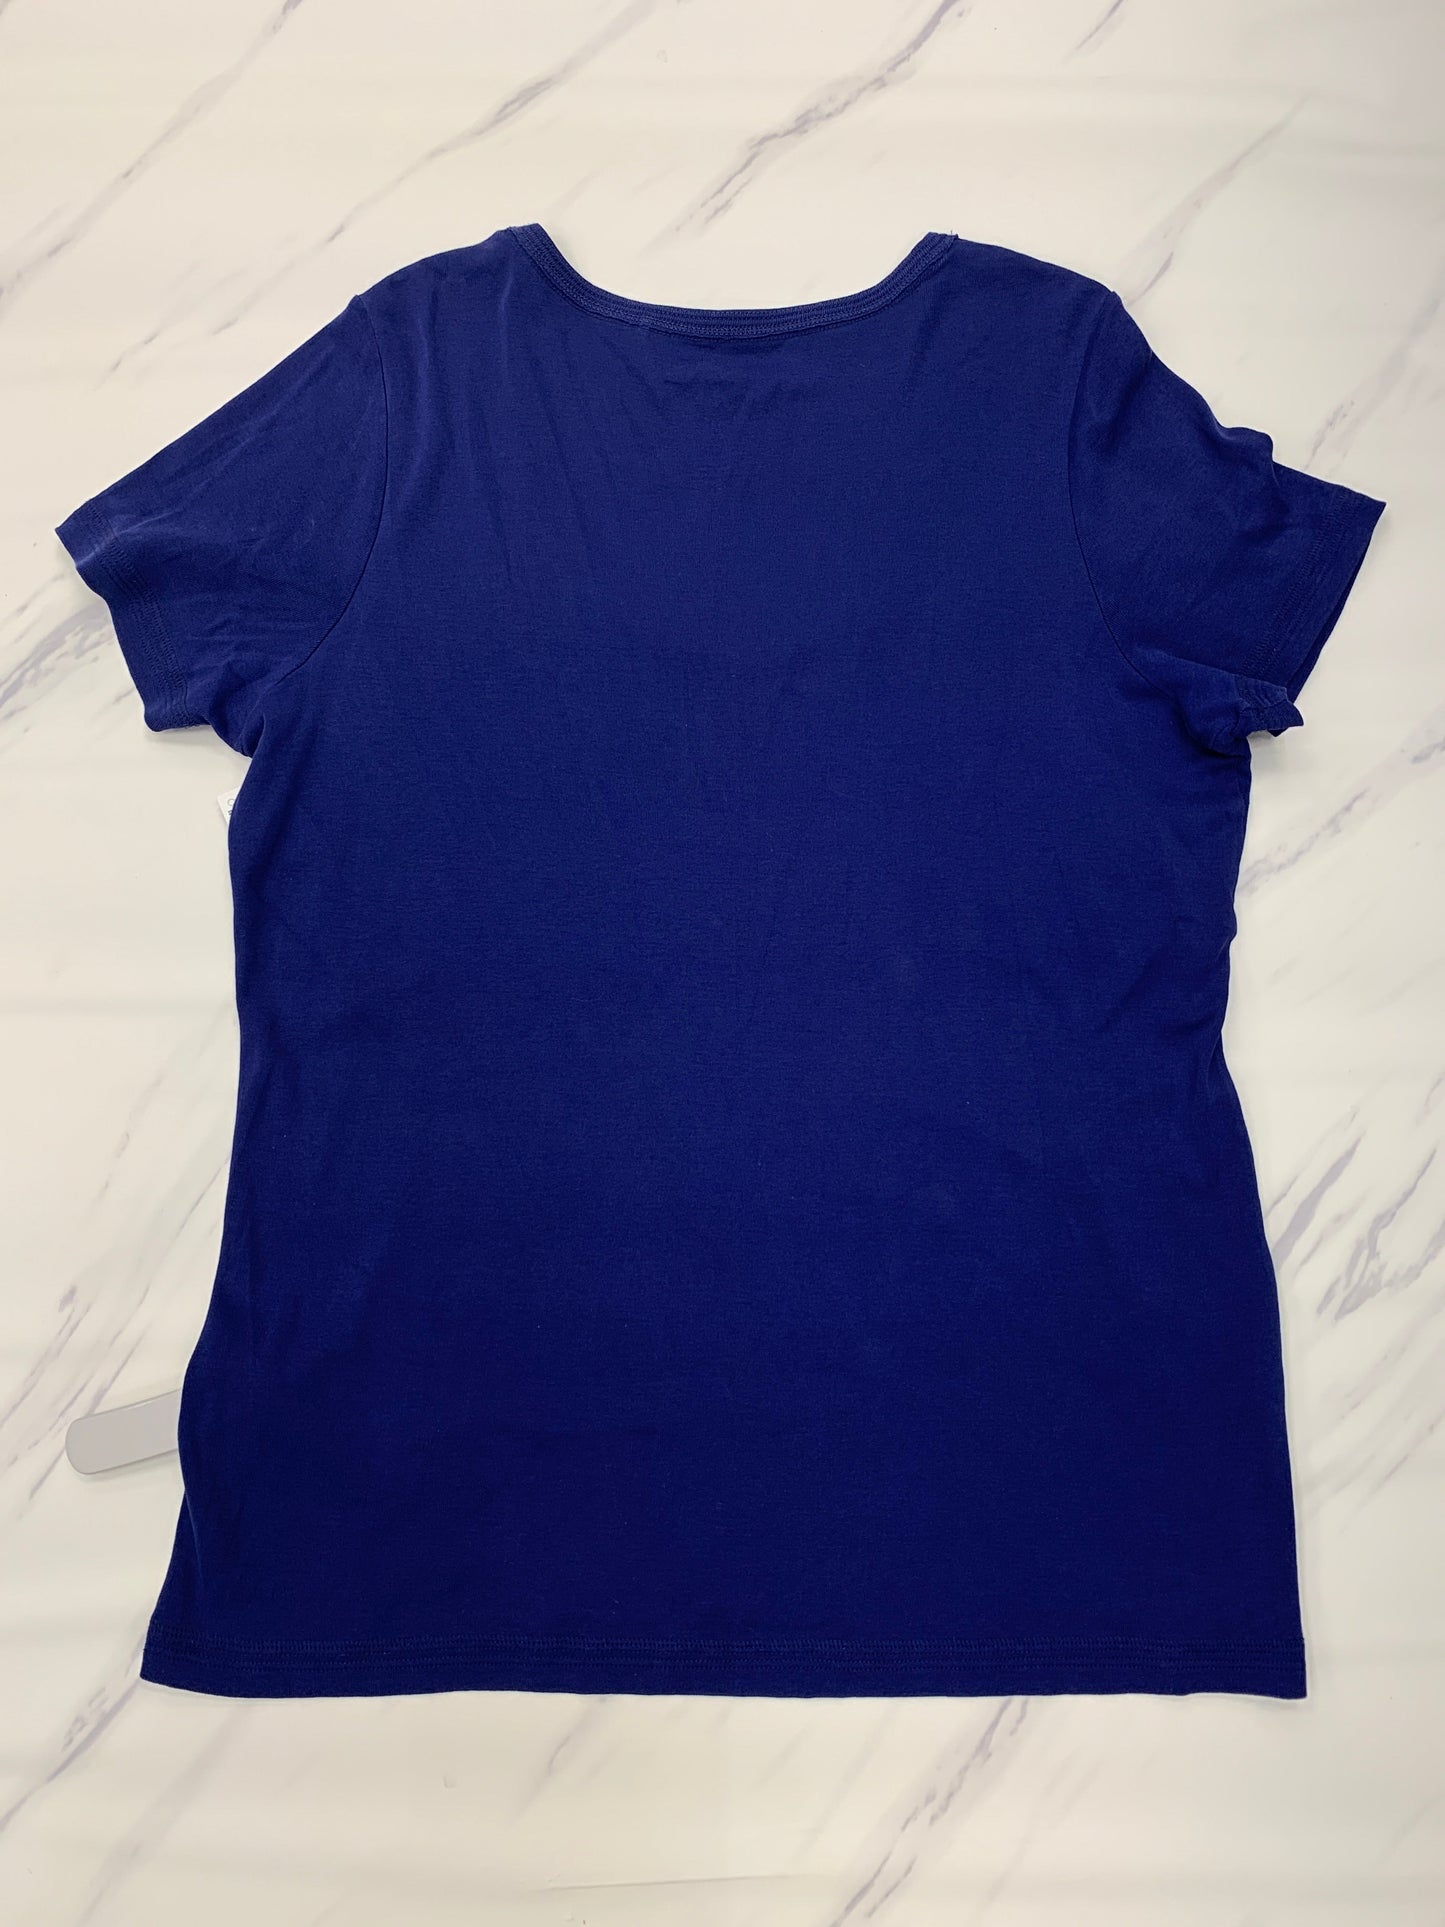 Blue Top Short Sleeve Tommy Bahama, Size Xl